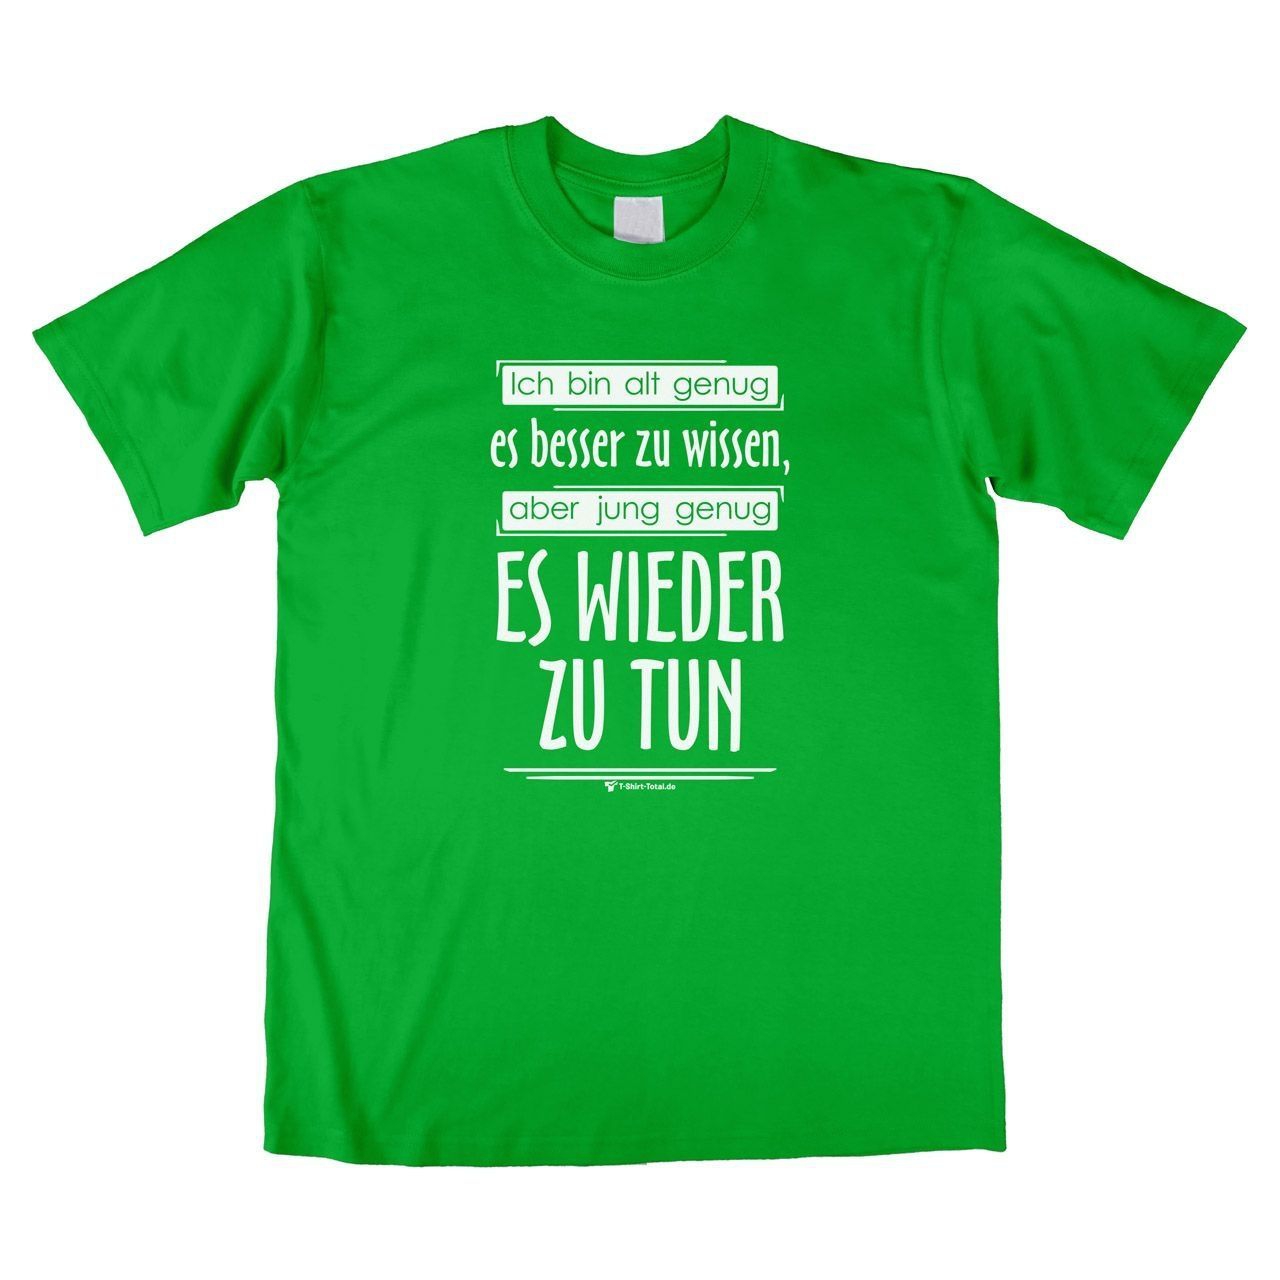 Ich bin alt genug Unisex T-Shirt grün Extra Large